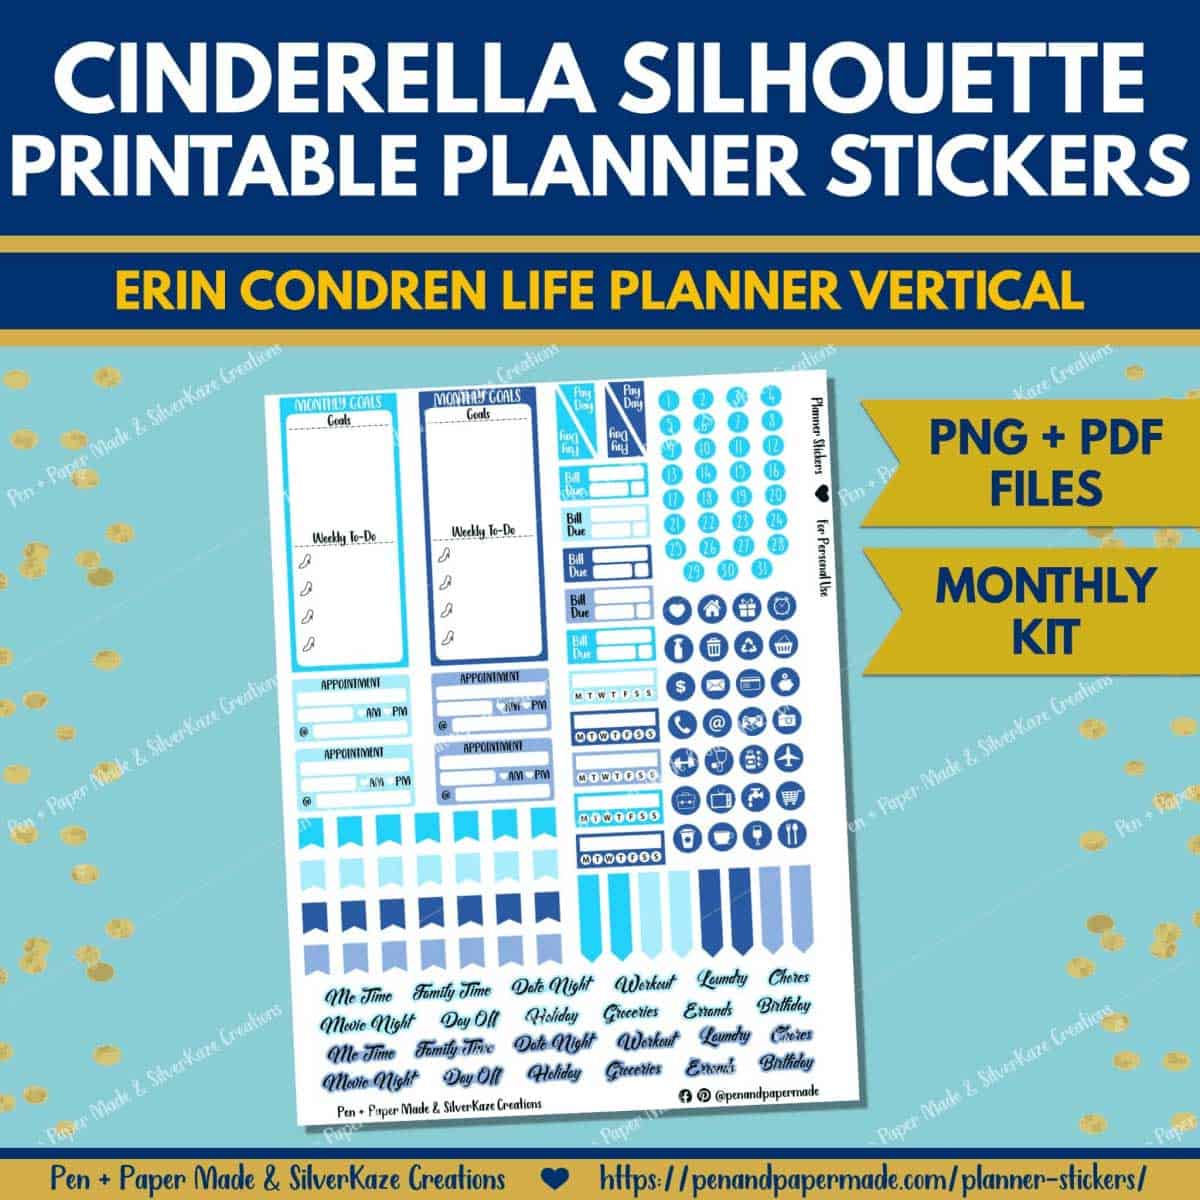 disney princess cinderella monthly kit.